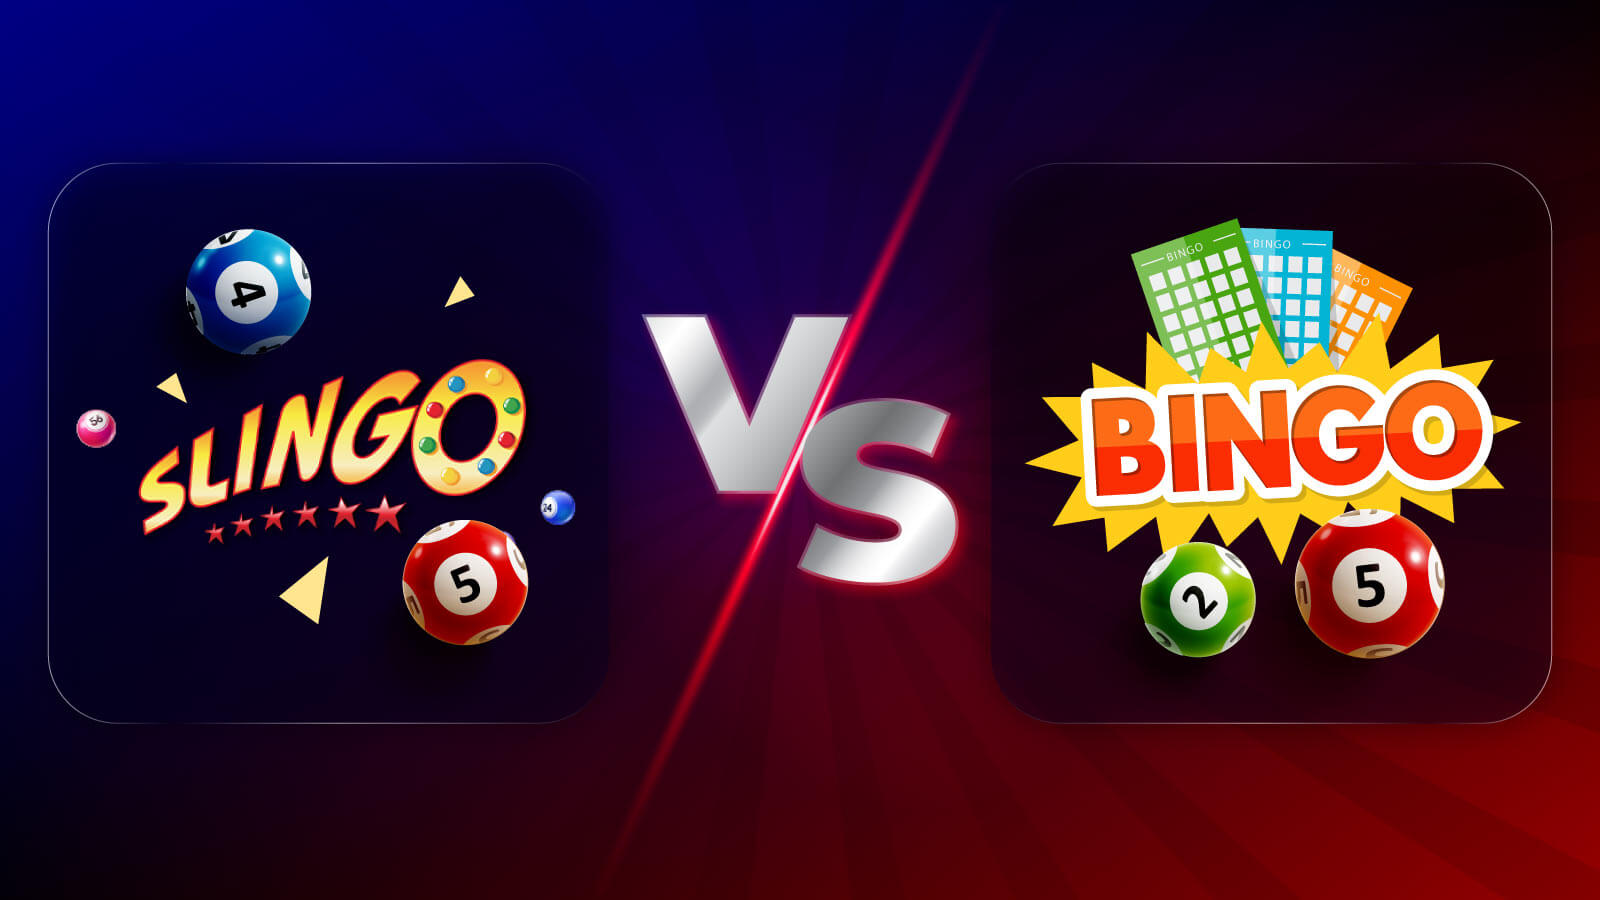 Slingo Sites vs. Bingo Sites